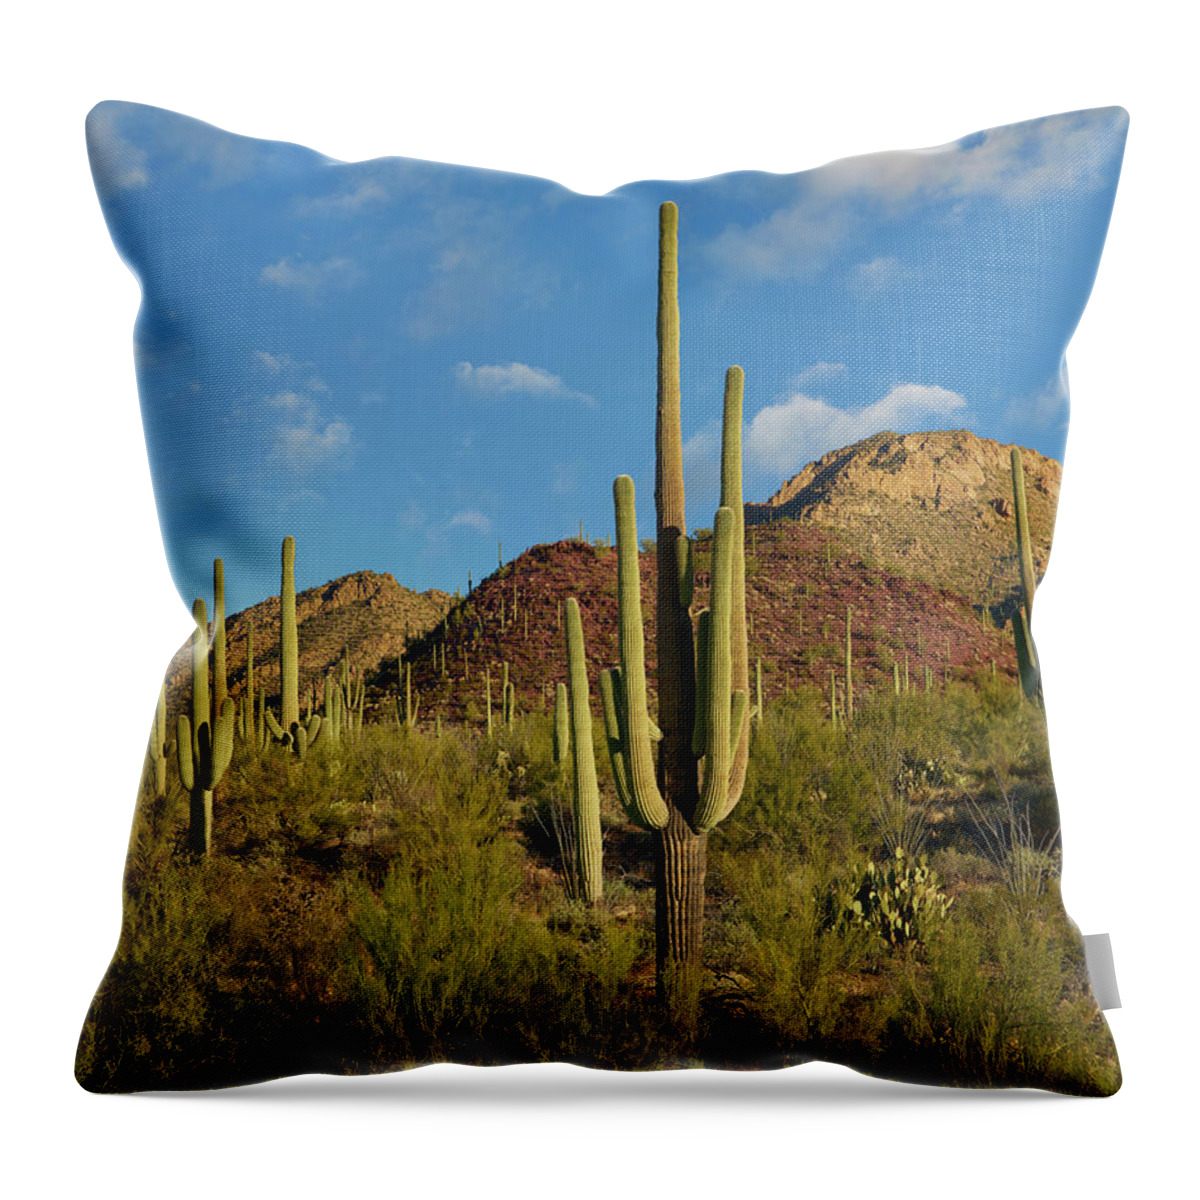 00557654 Throw Pillow featuring the photograph Saguaro, Tucson Mts, Saguaro National Park, Arizona by Tim Fitzharris